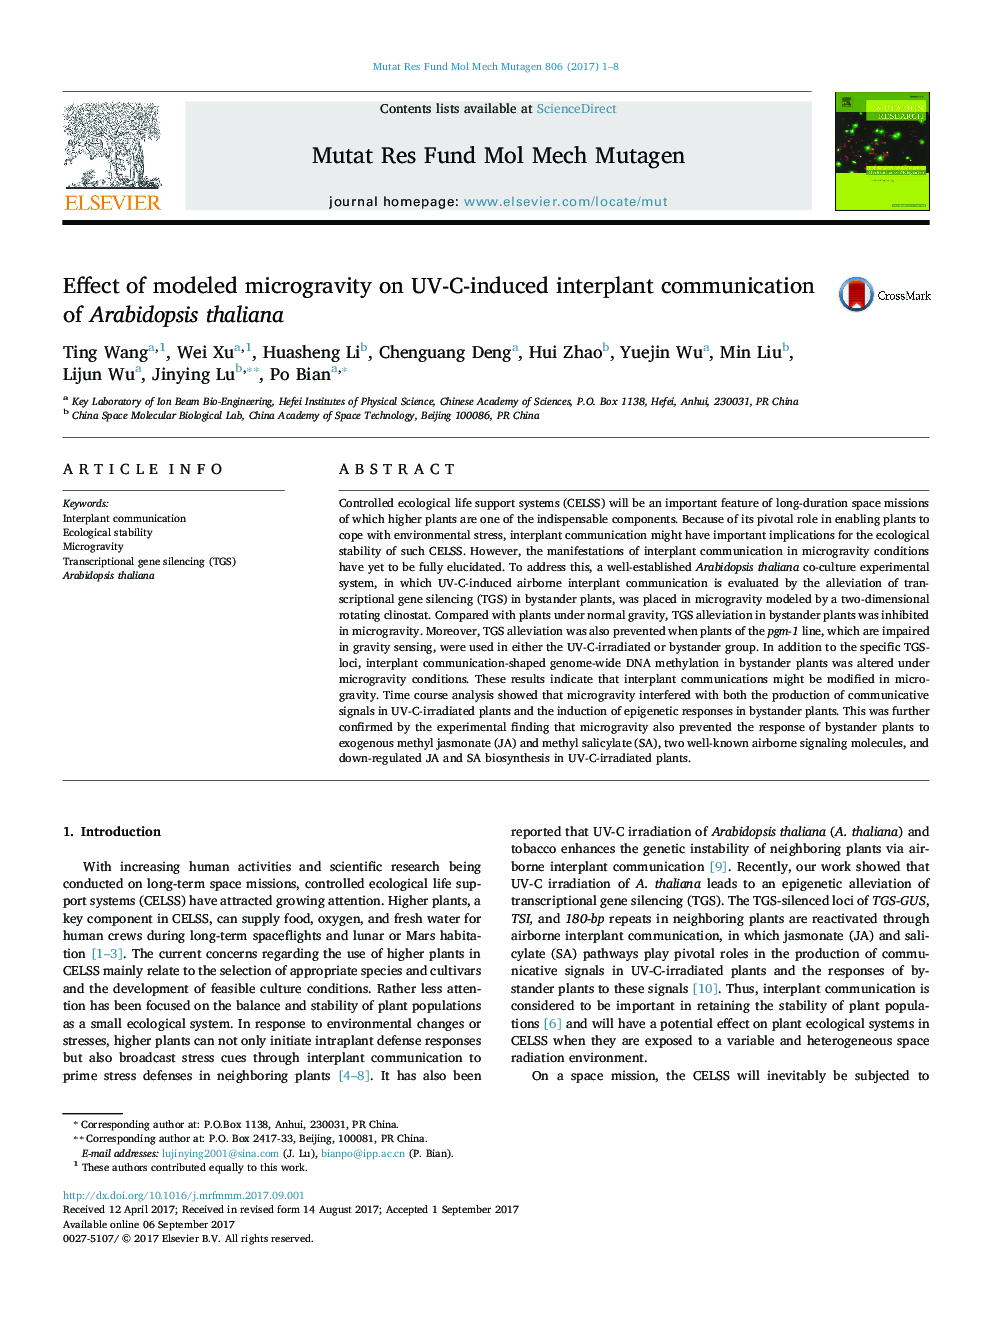 Effect of modeled microgravity on UV-C-induced interplant communication of Arabidopsis thaliana